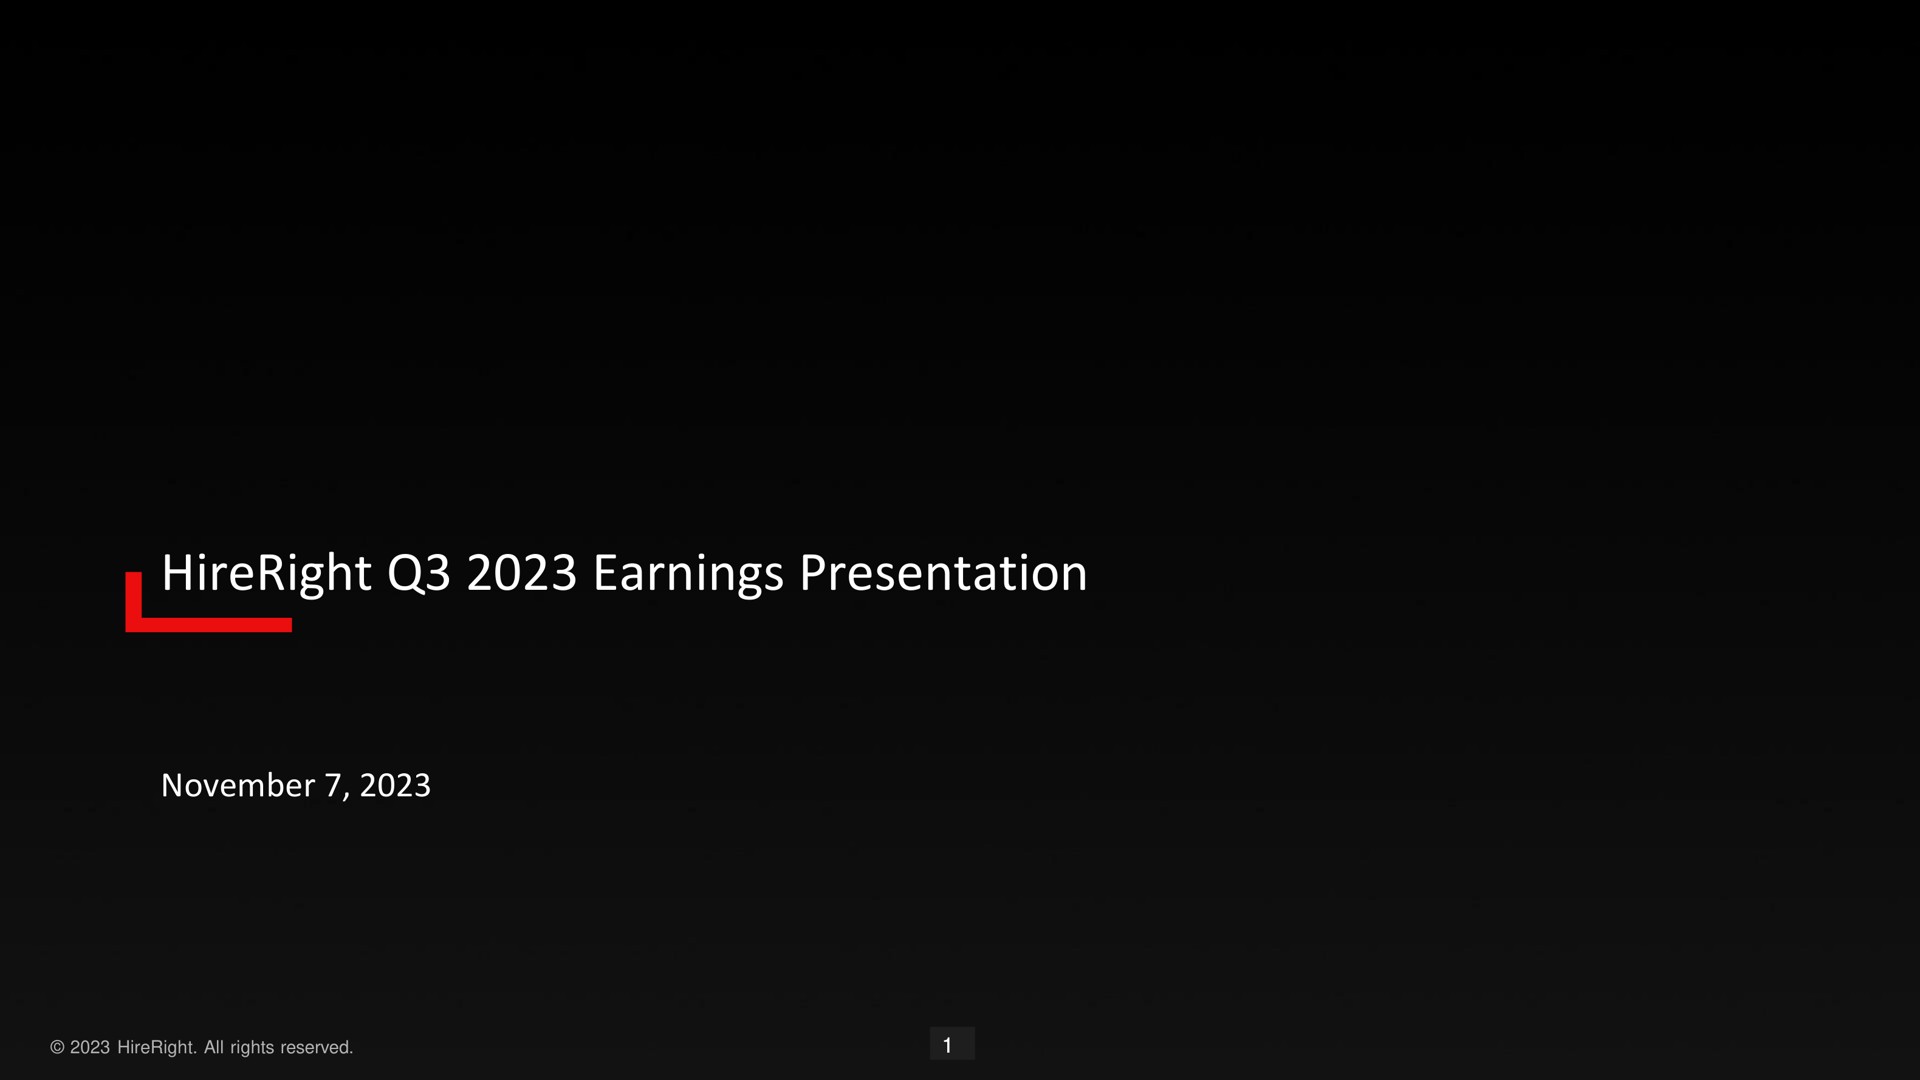 earnings presentation | HireRight